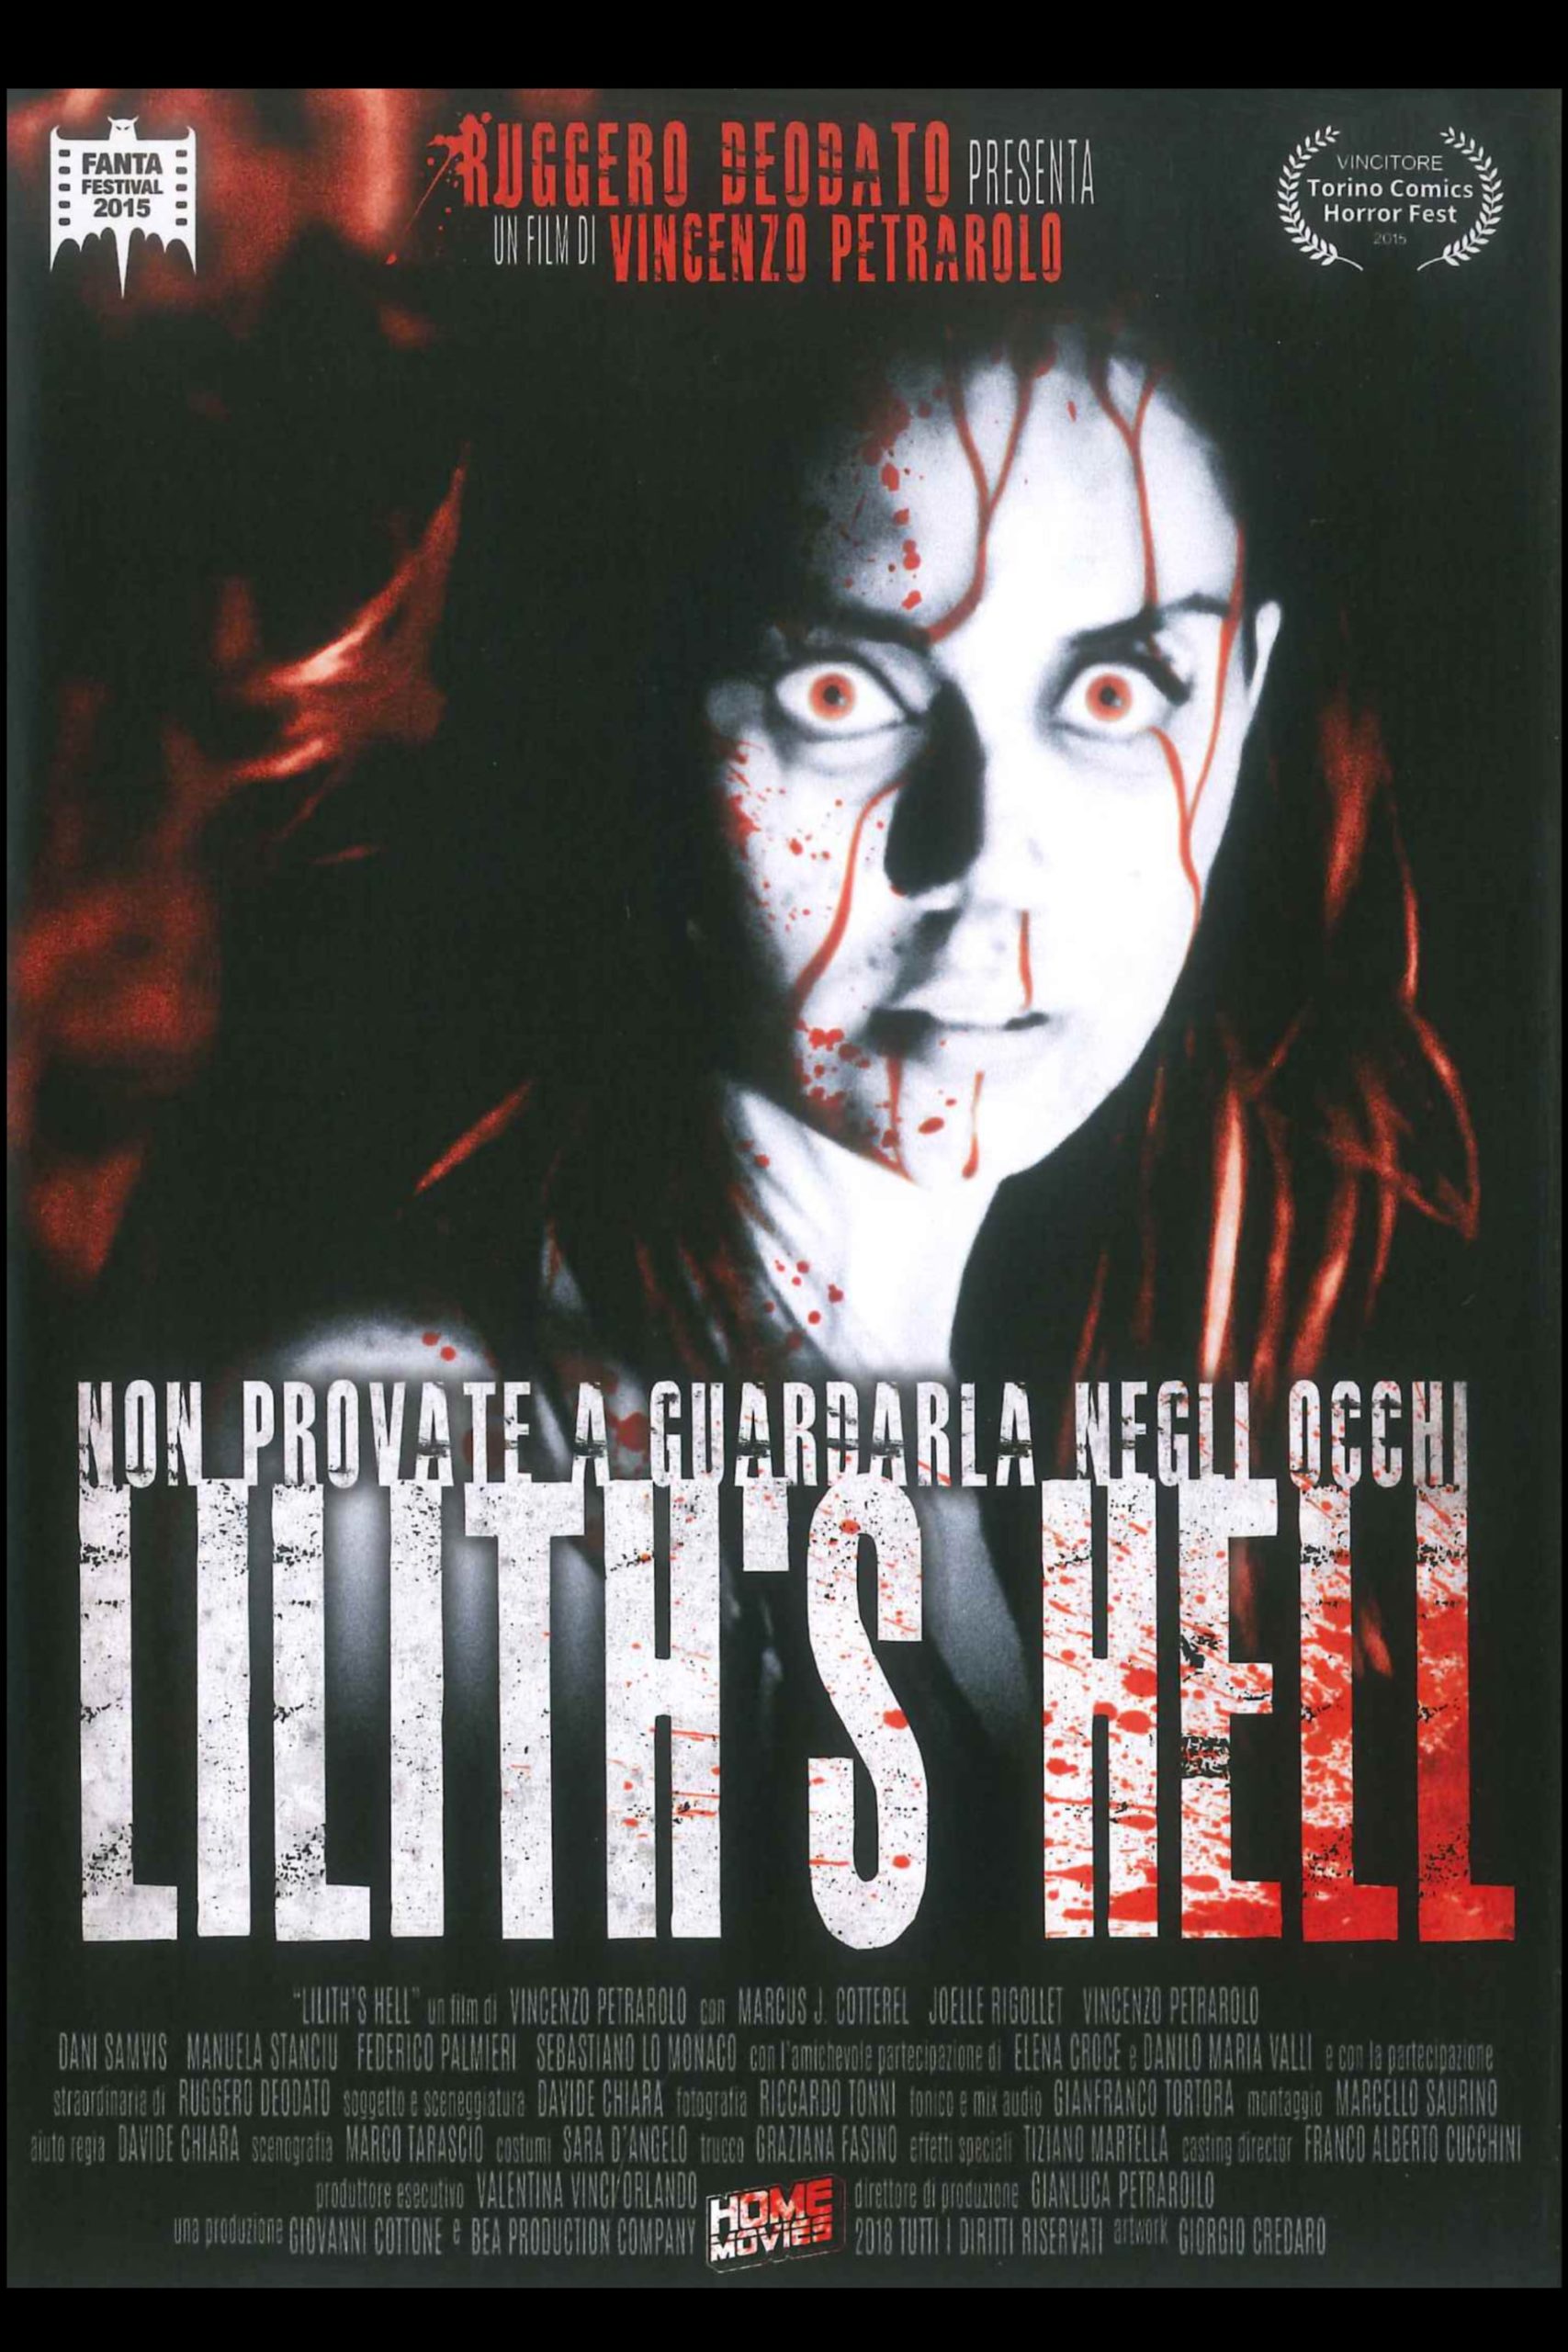 lilith's hell locandina